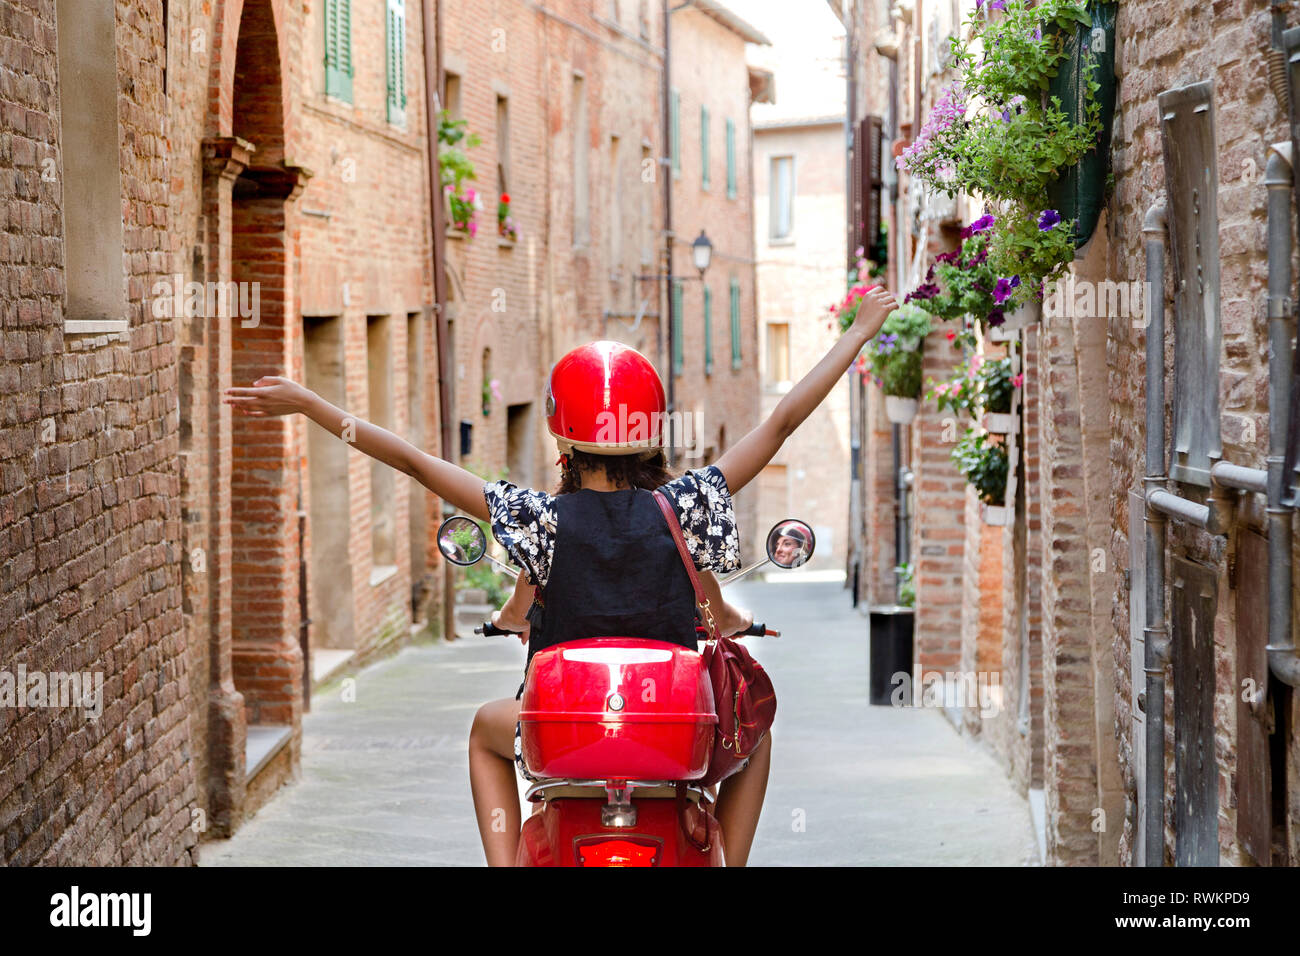 Woman exploring on scooter, Città della Pieve, Umbria, Italy Stock Photo